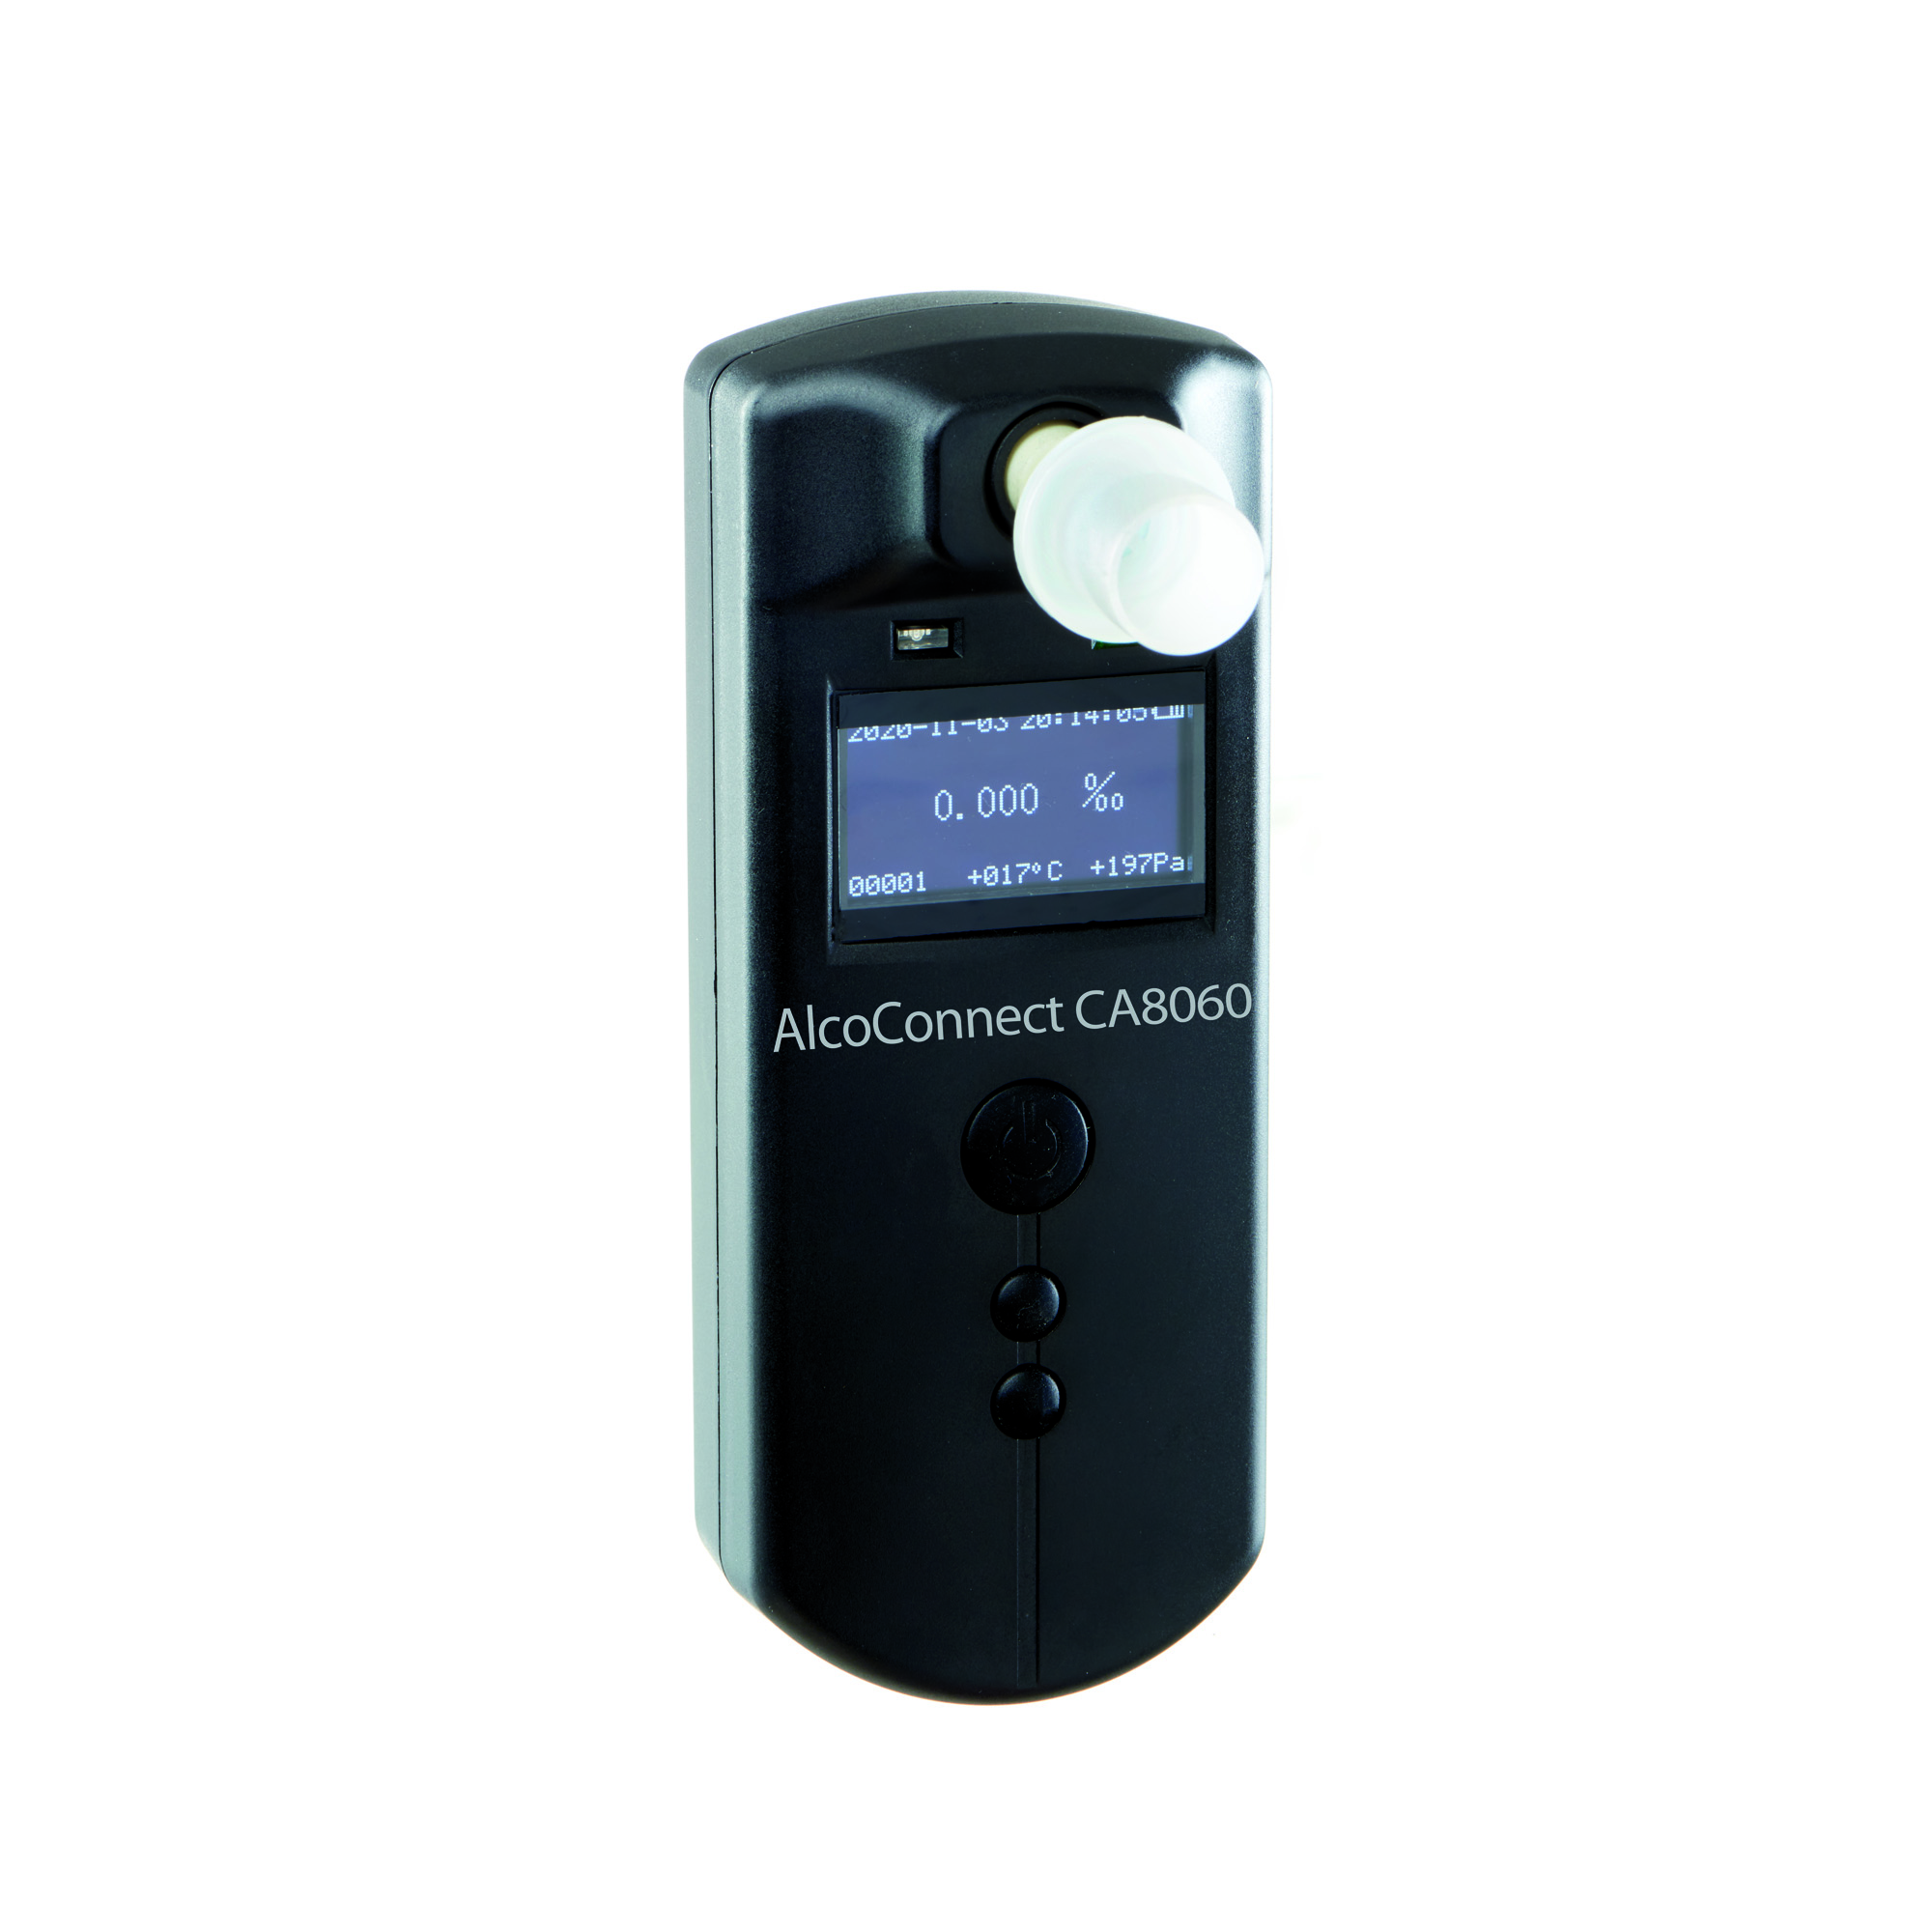 AlcoConnect CA8060 breathalyser